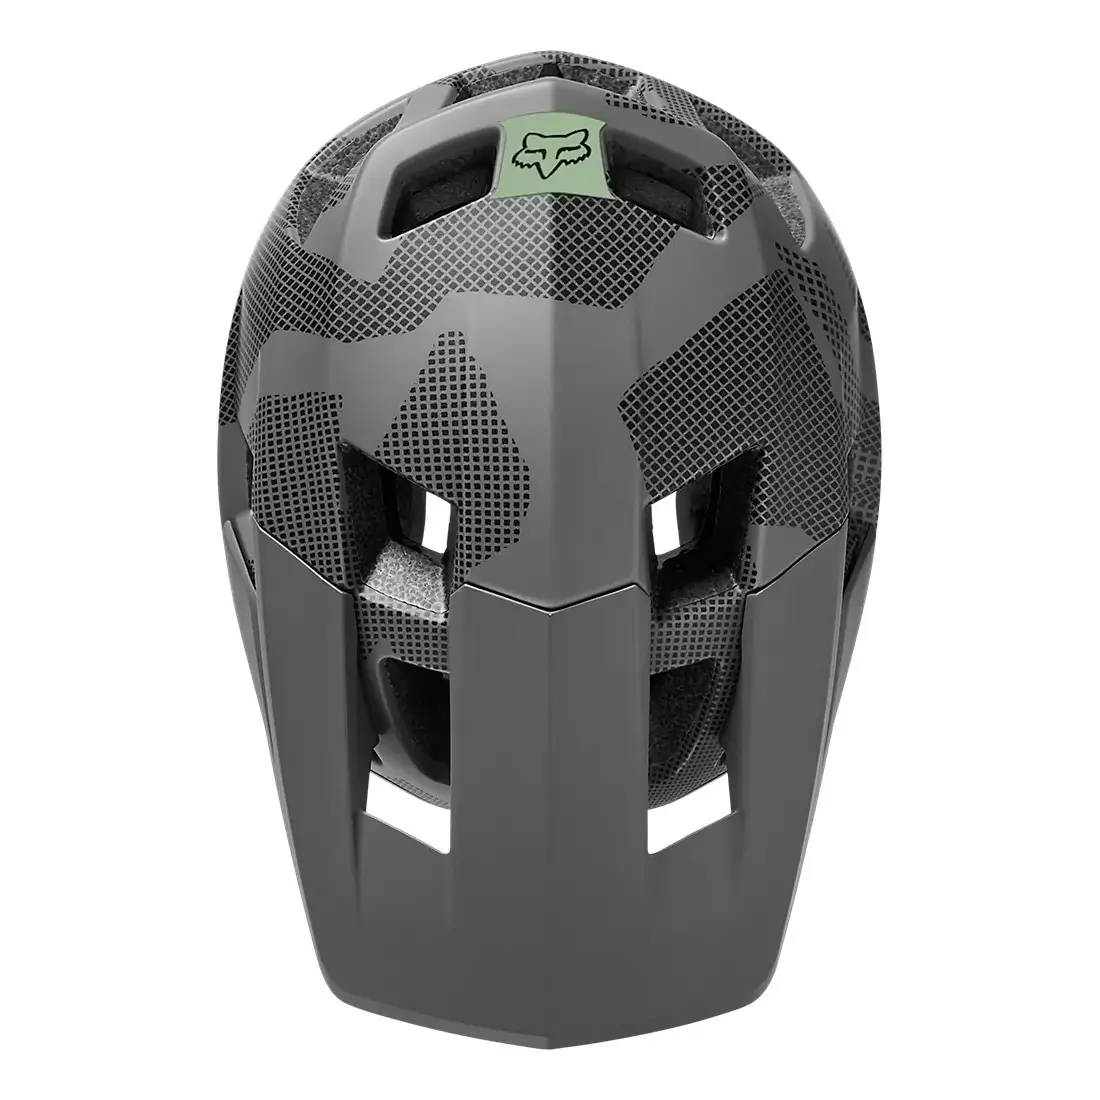 Dropframe Pro Camo Enduro Helmet Gray Camouflage Size XL (58-60cm) #4